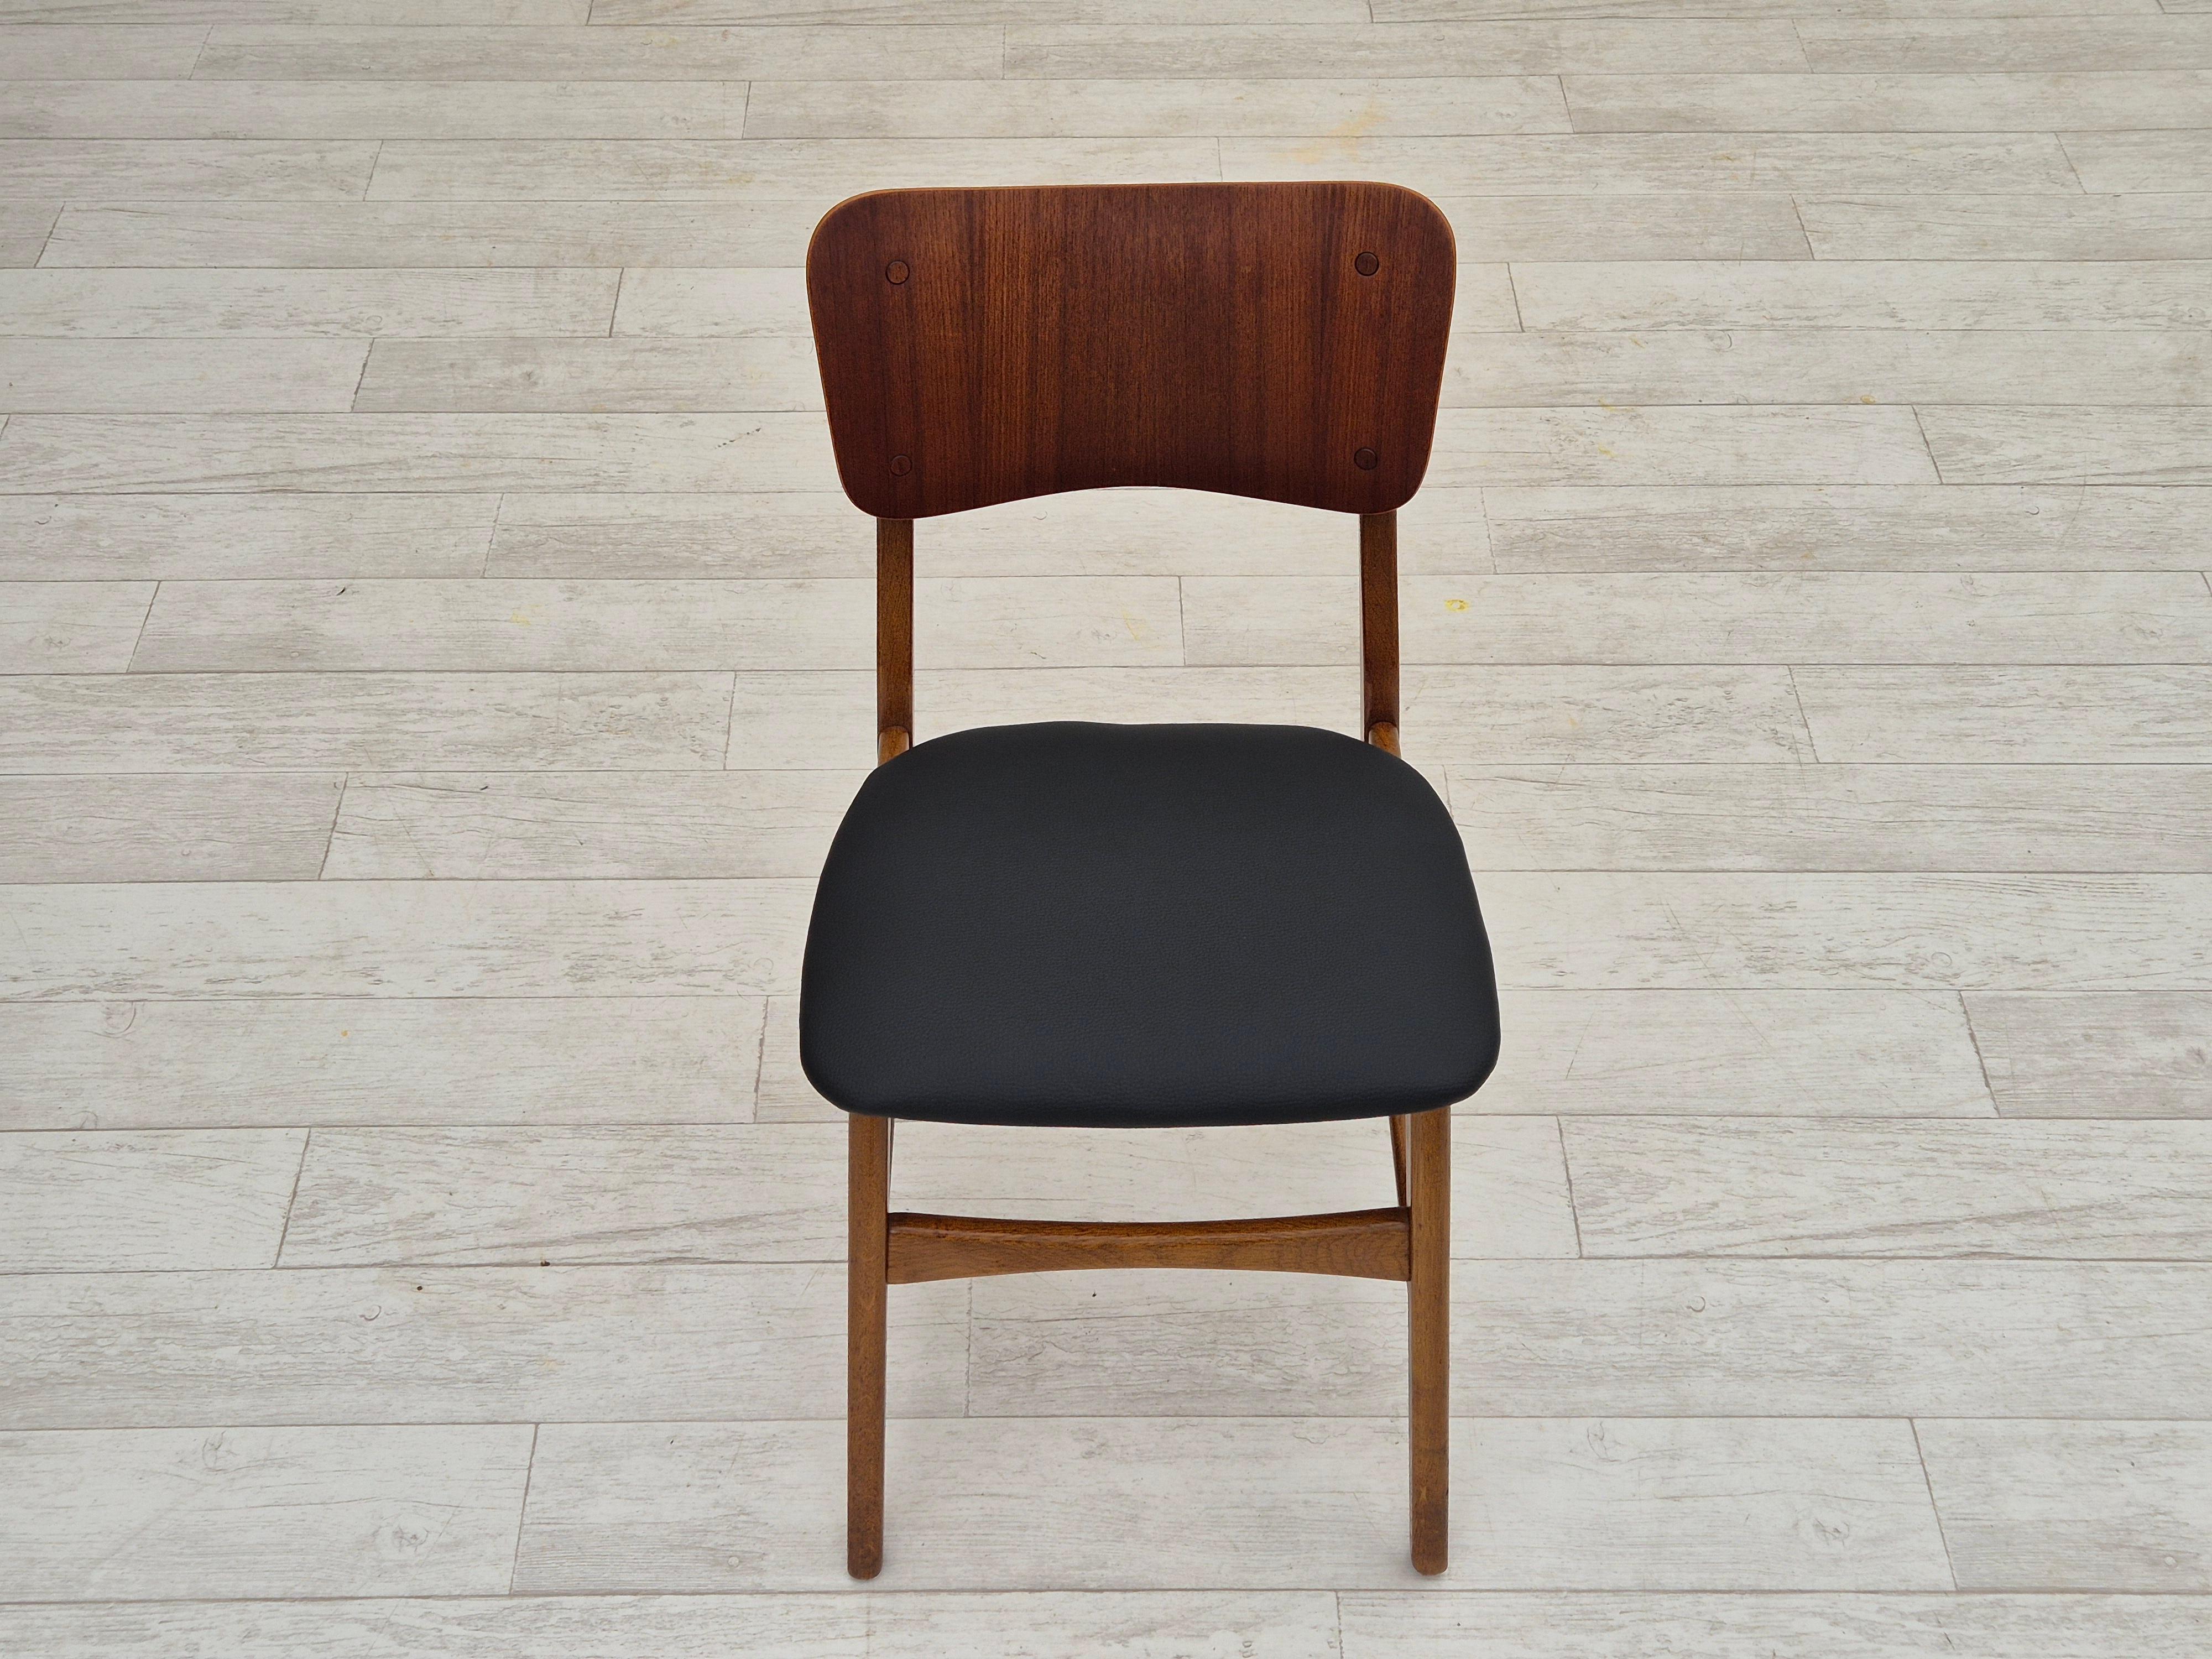 1960s, Danish design by Ib Kofod Larsen, Christensen & Larsen, set of chairs. 7